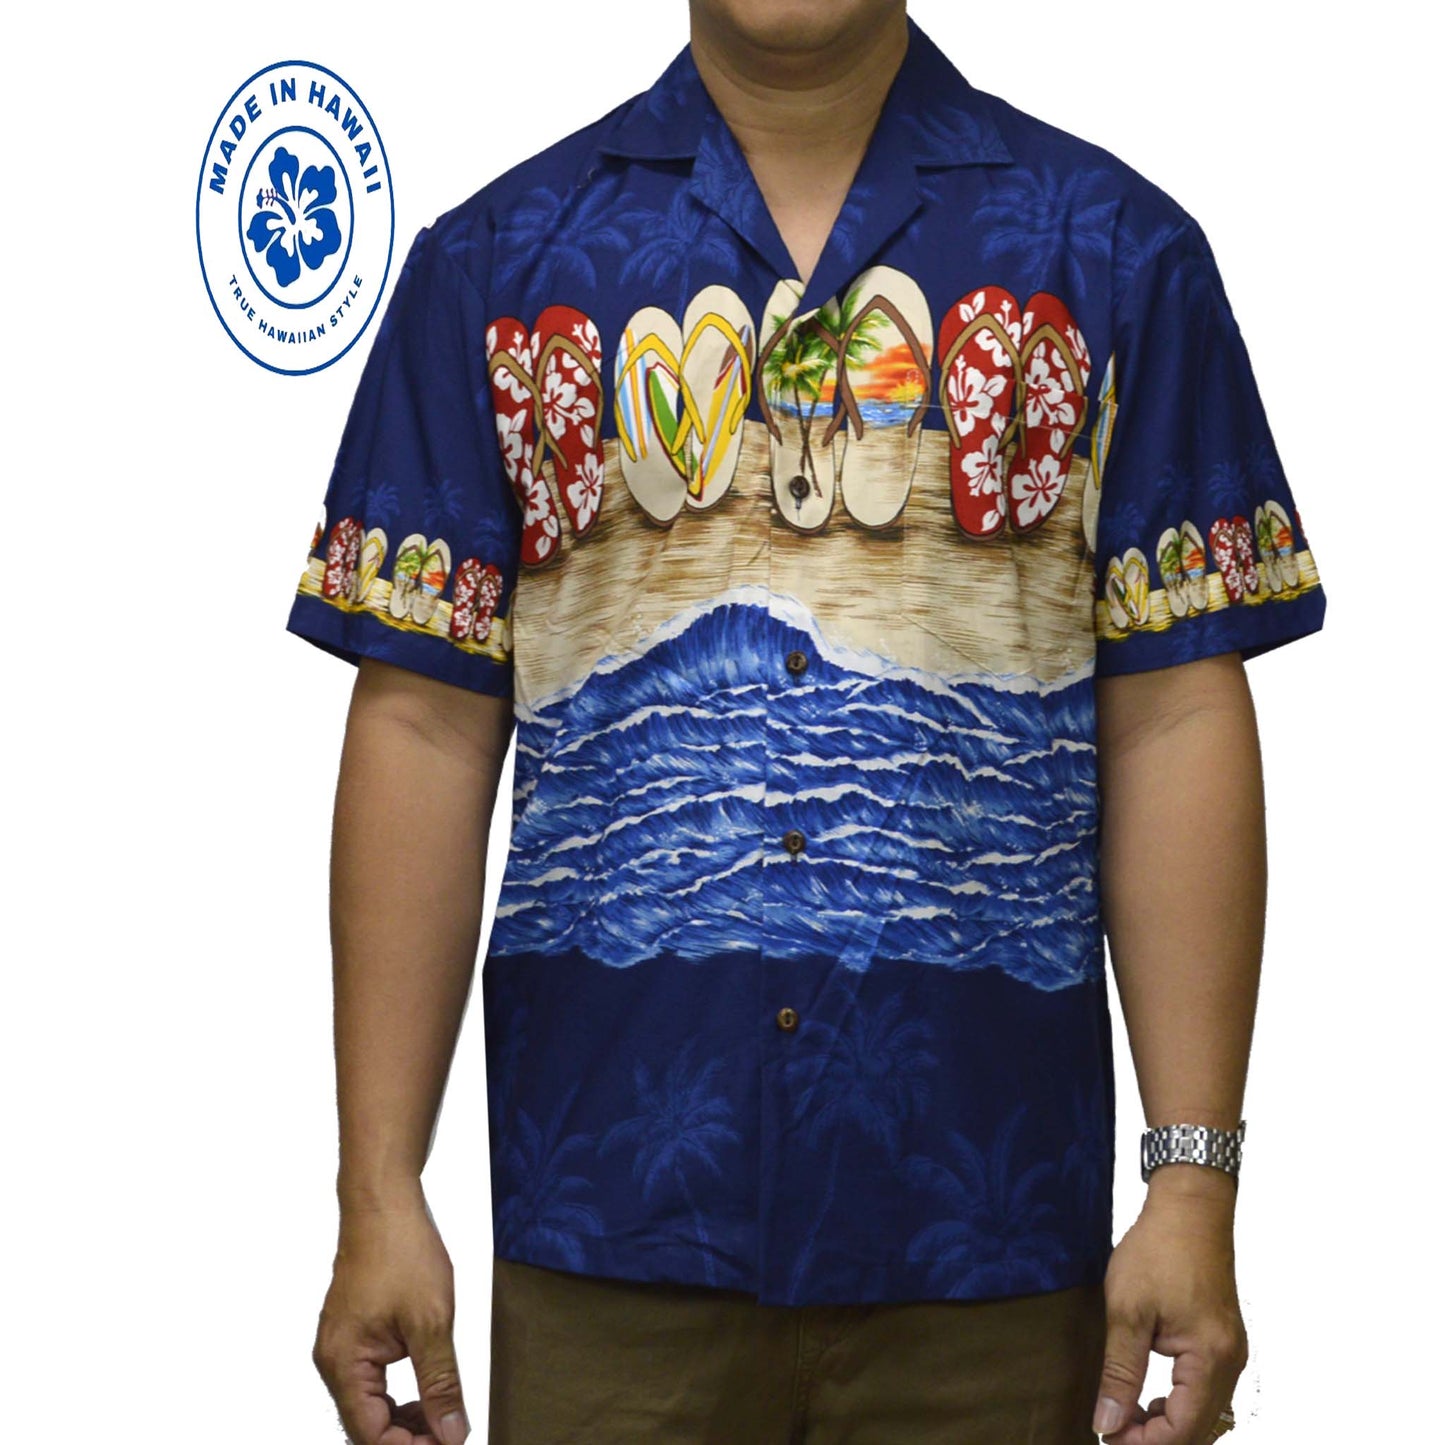 Ky's Hawaiian Cotton Shirt Hawaii Slipper-Navy